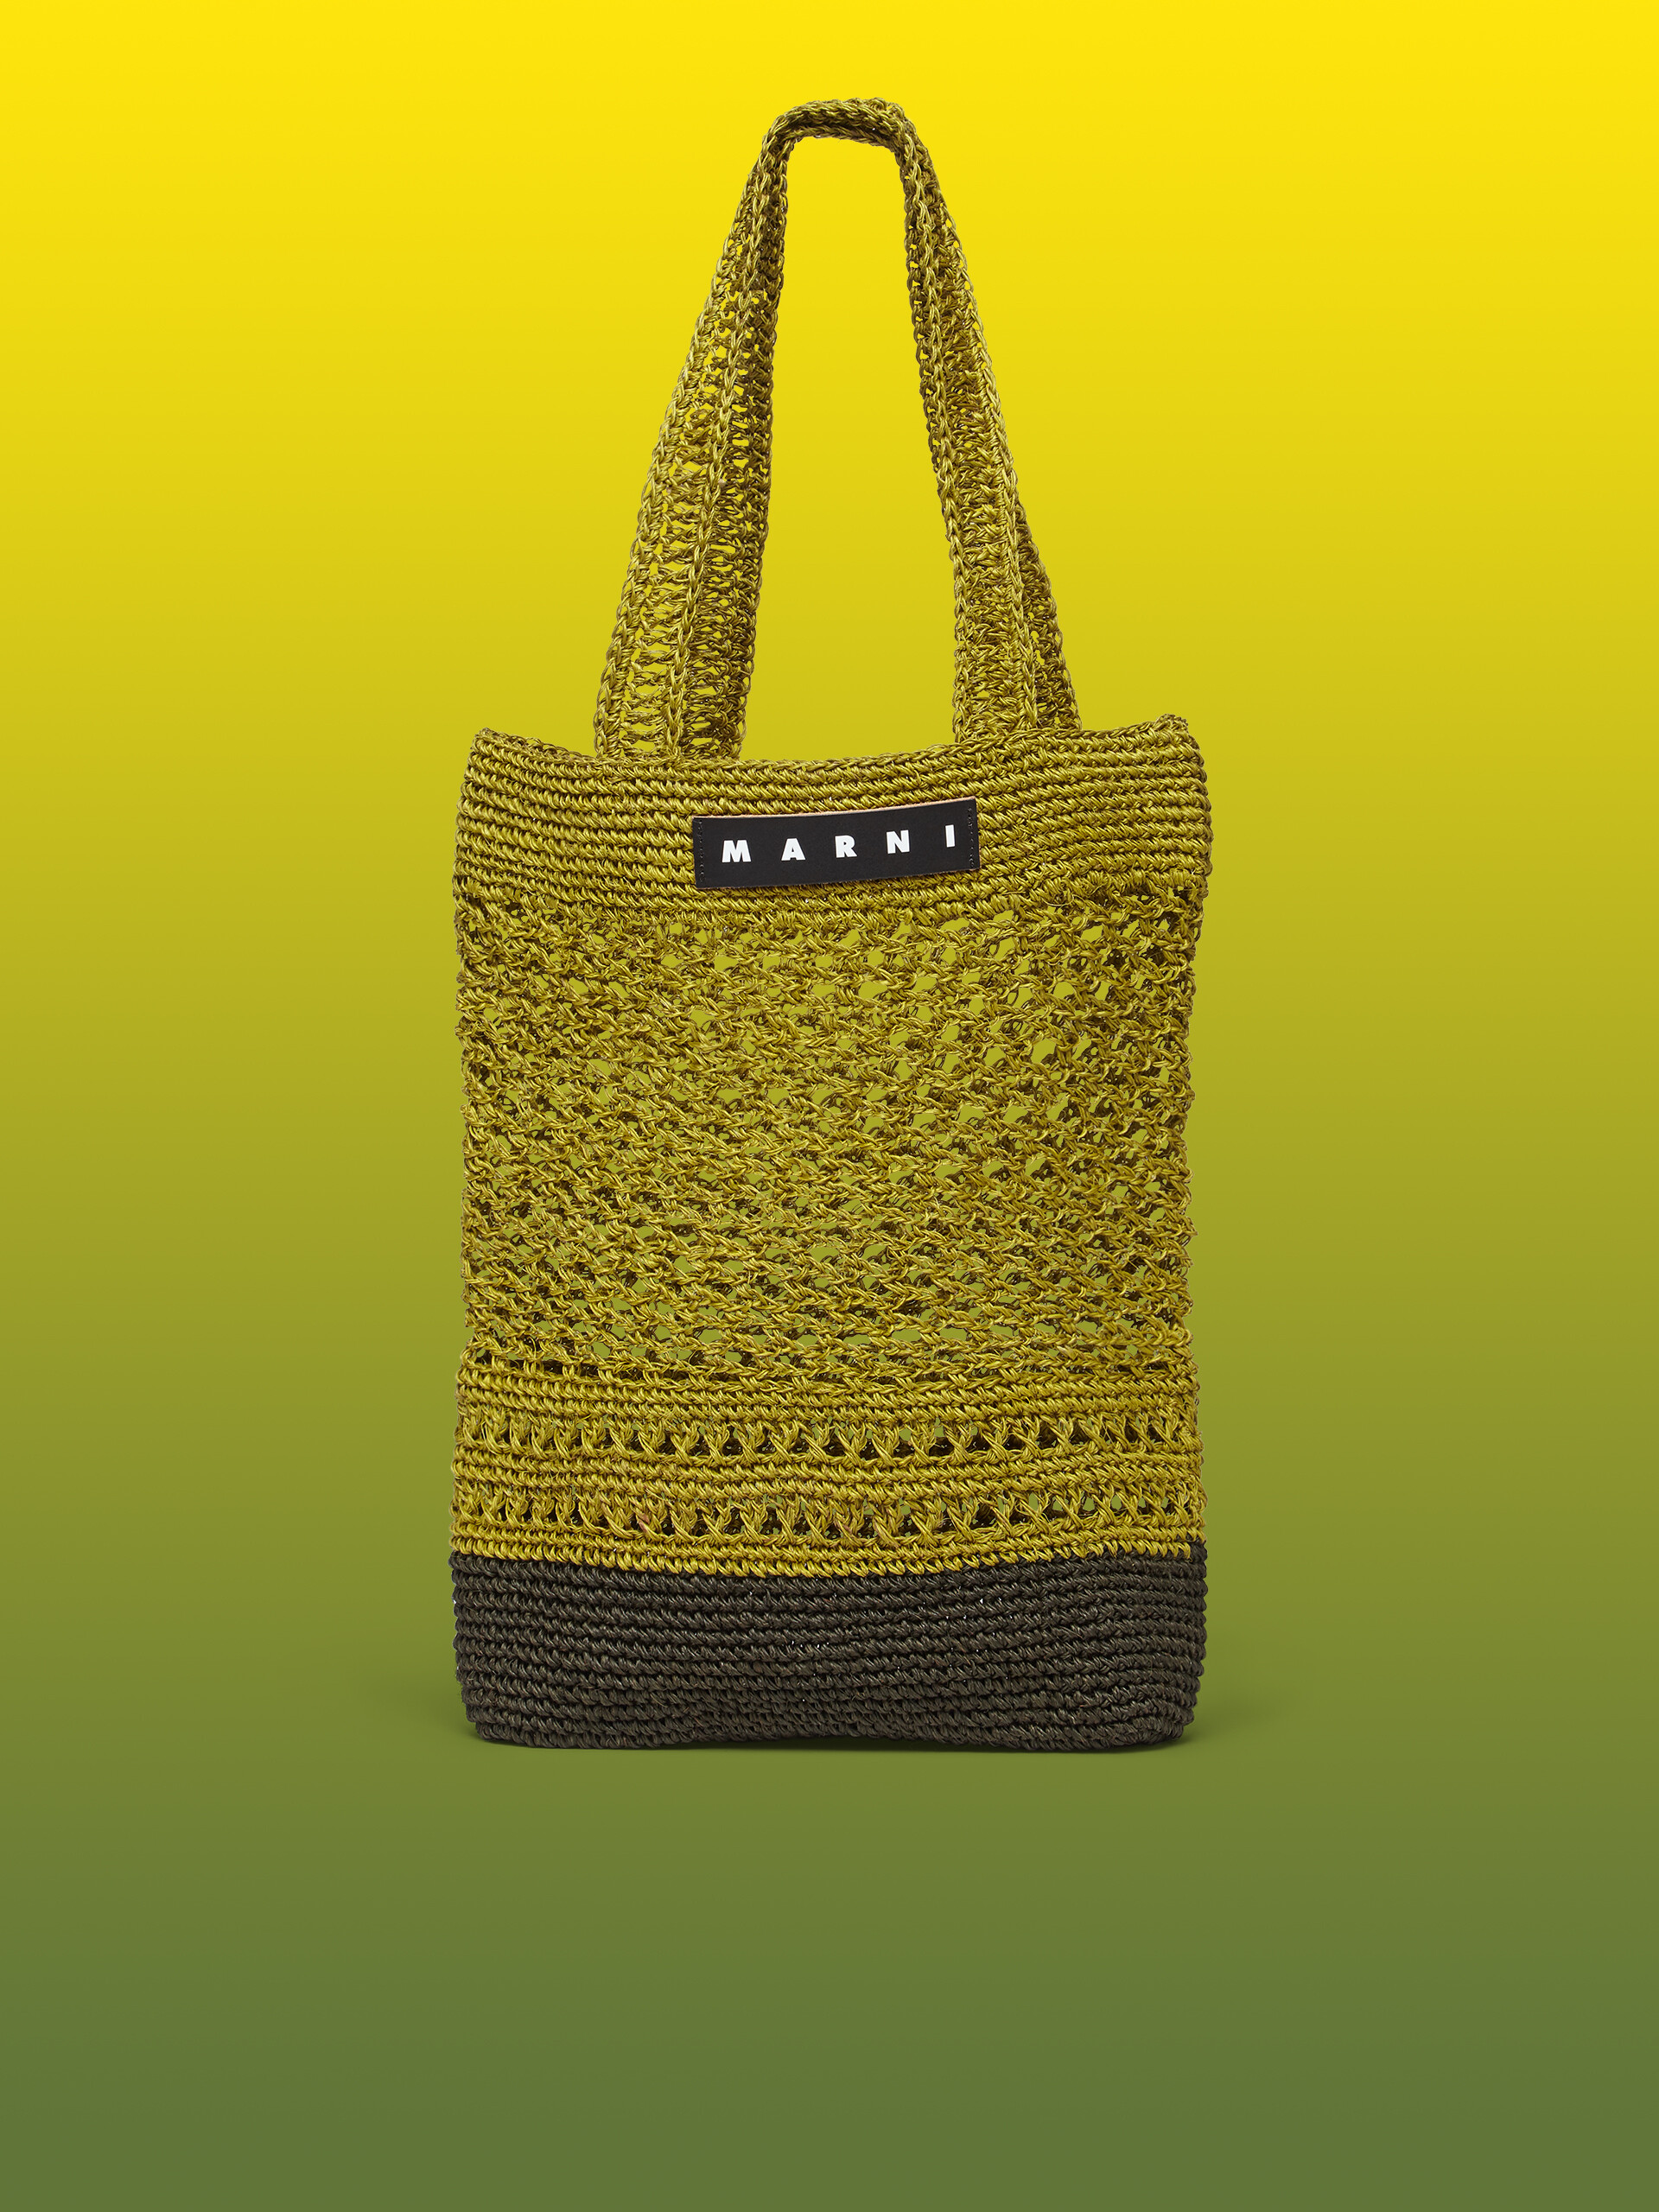 MARNI MARKET bag in green and brown natural fiber - Bags - Image 1